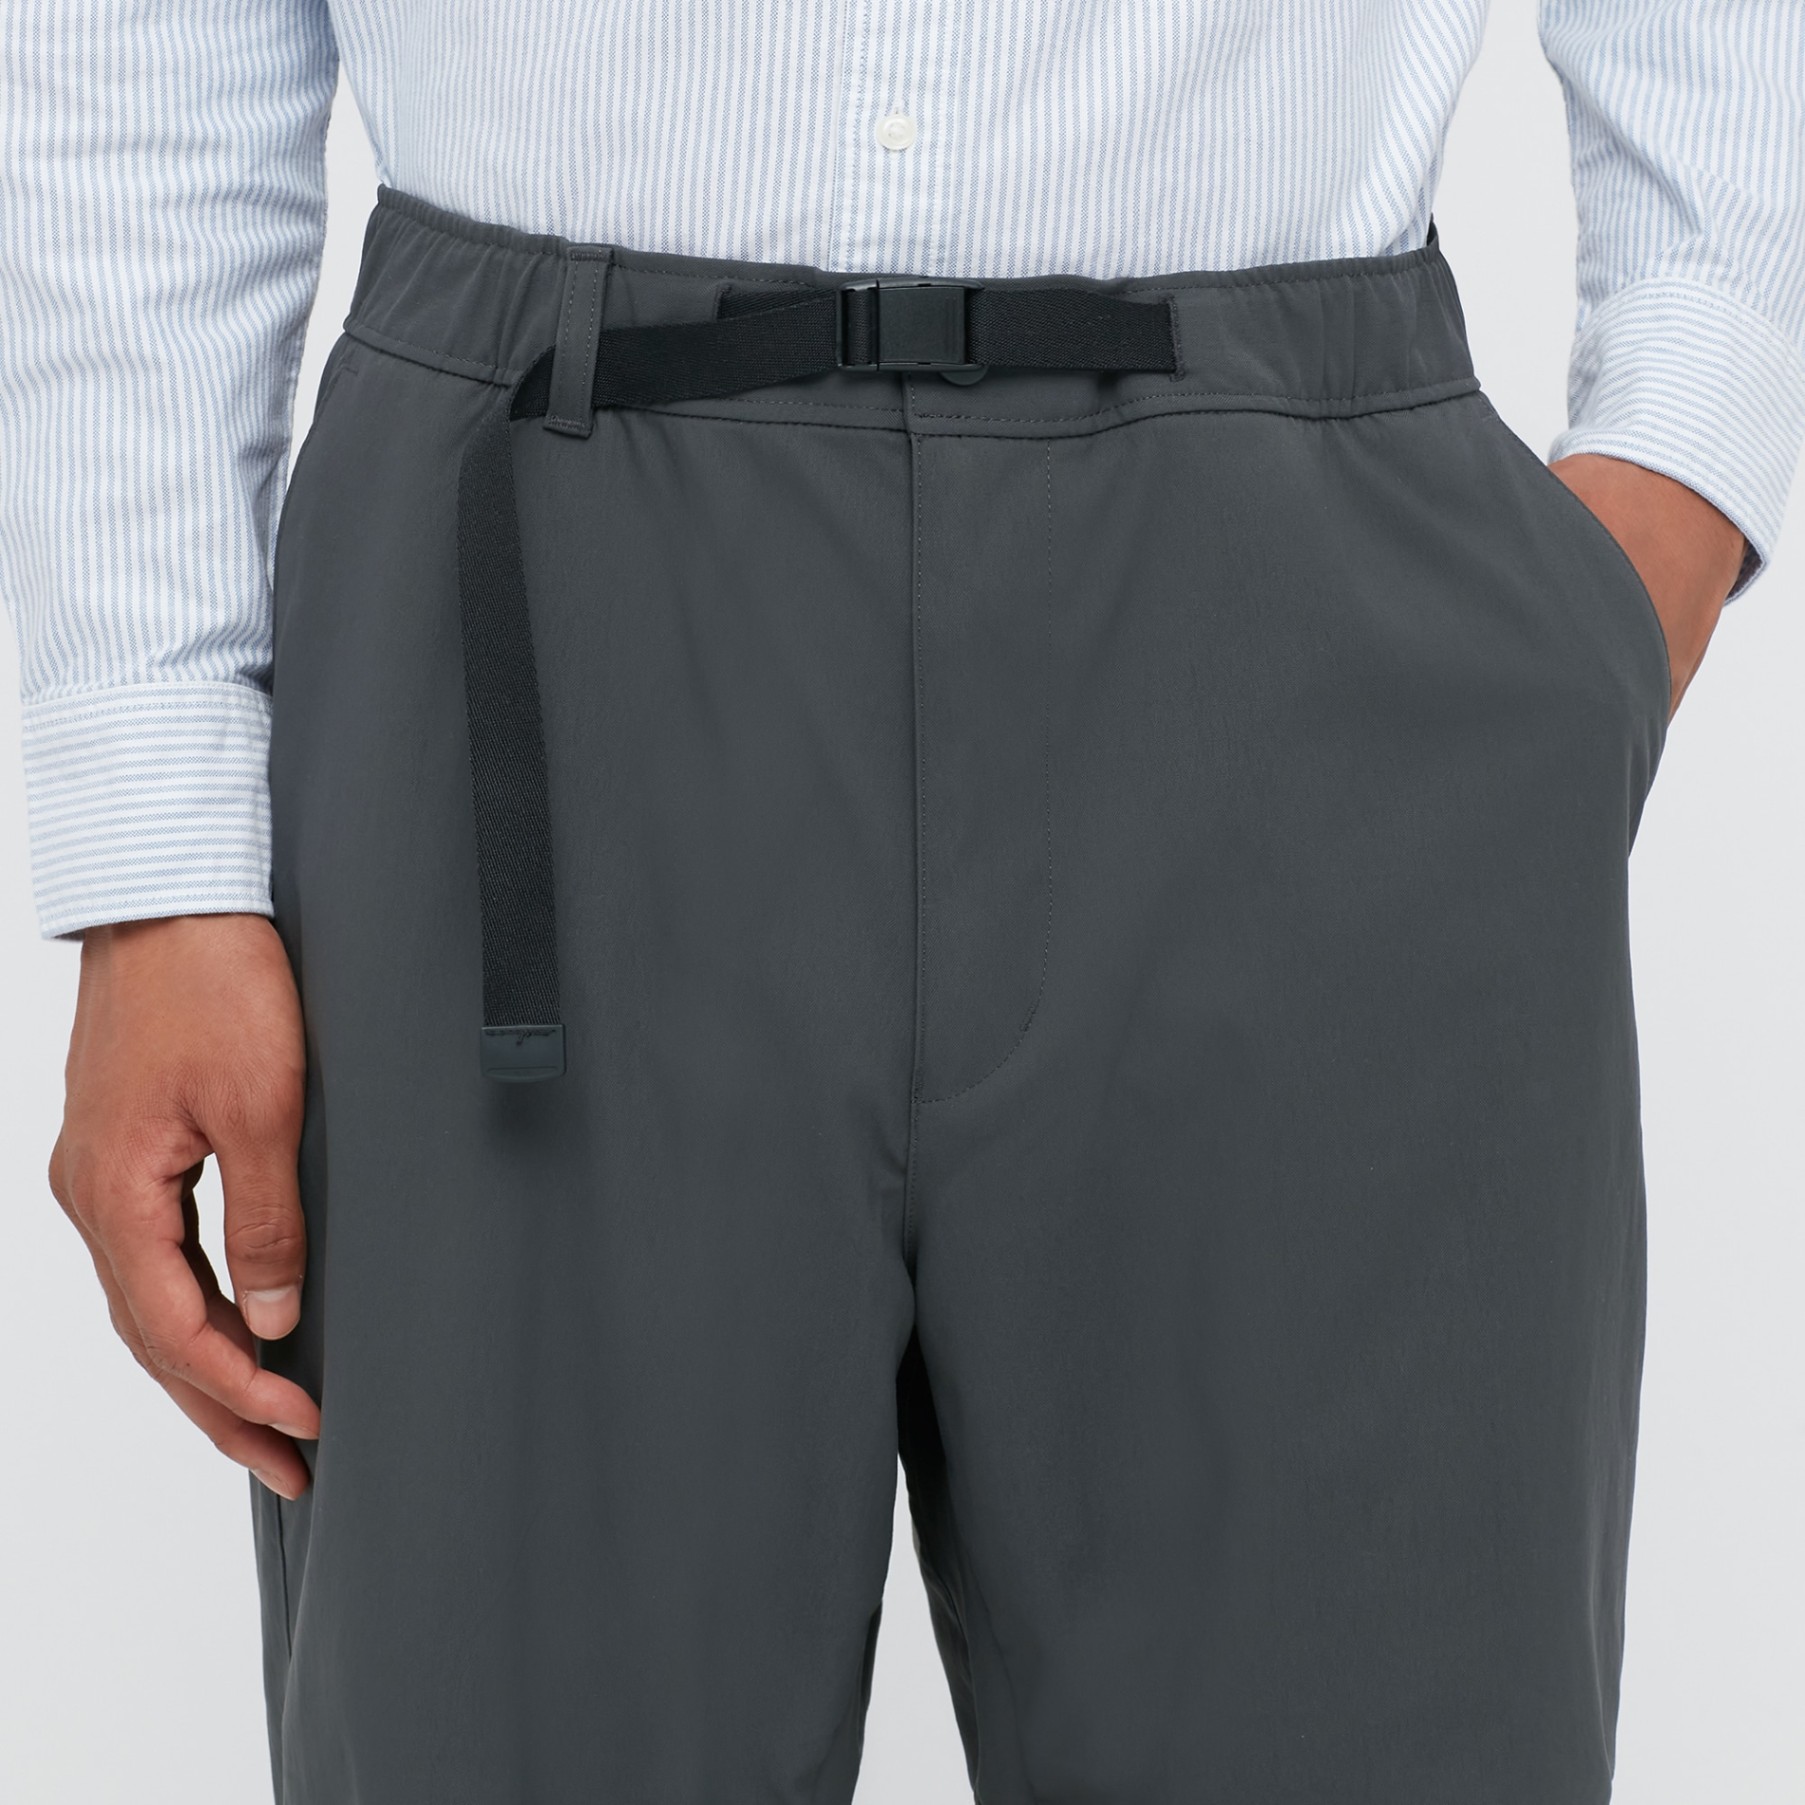 UNIQLO (L) Nylon Utility Geared Pants (3D Cut) Grey, Men's Fashion